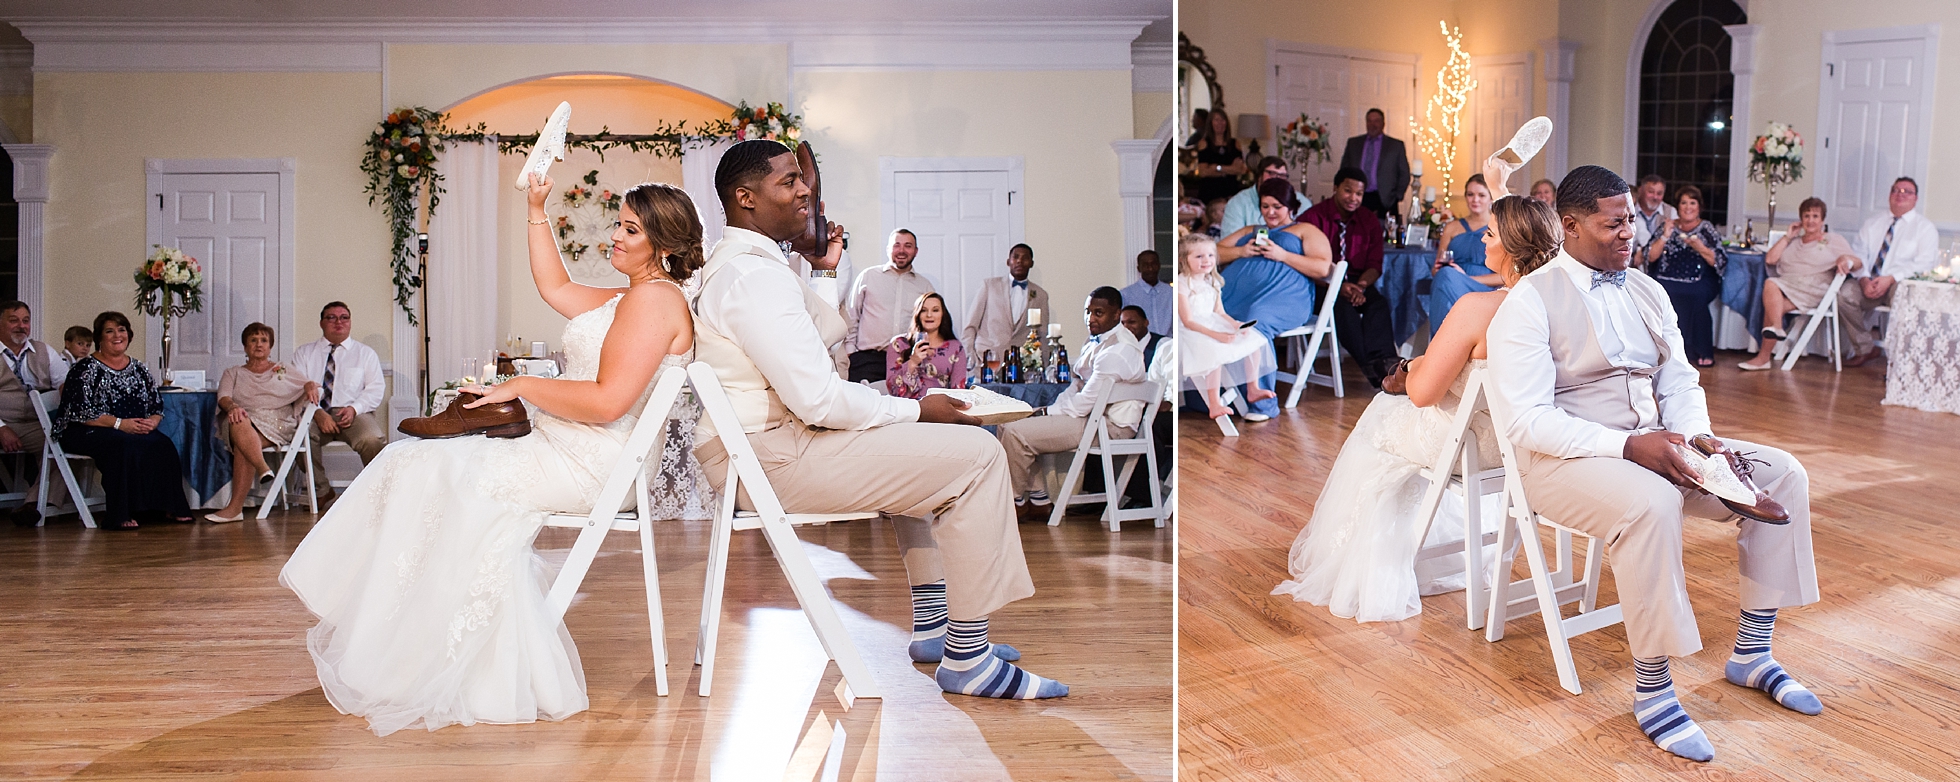 shoe game wedding reception